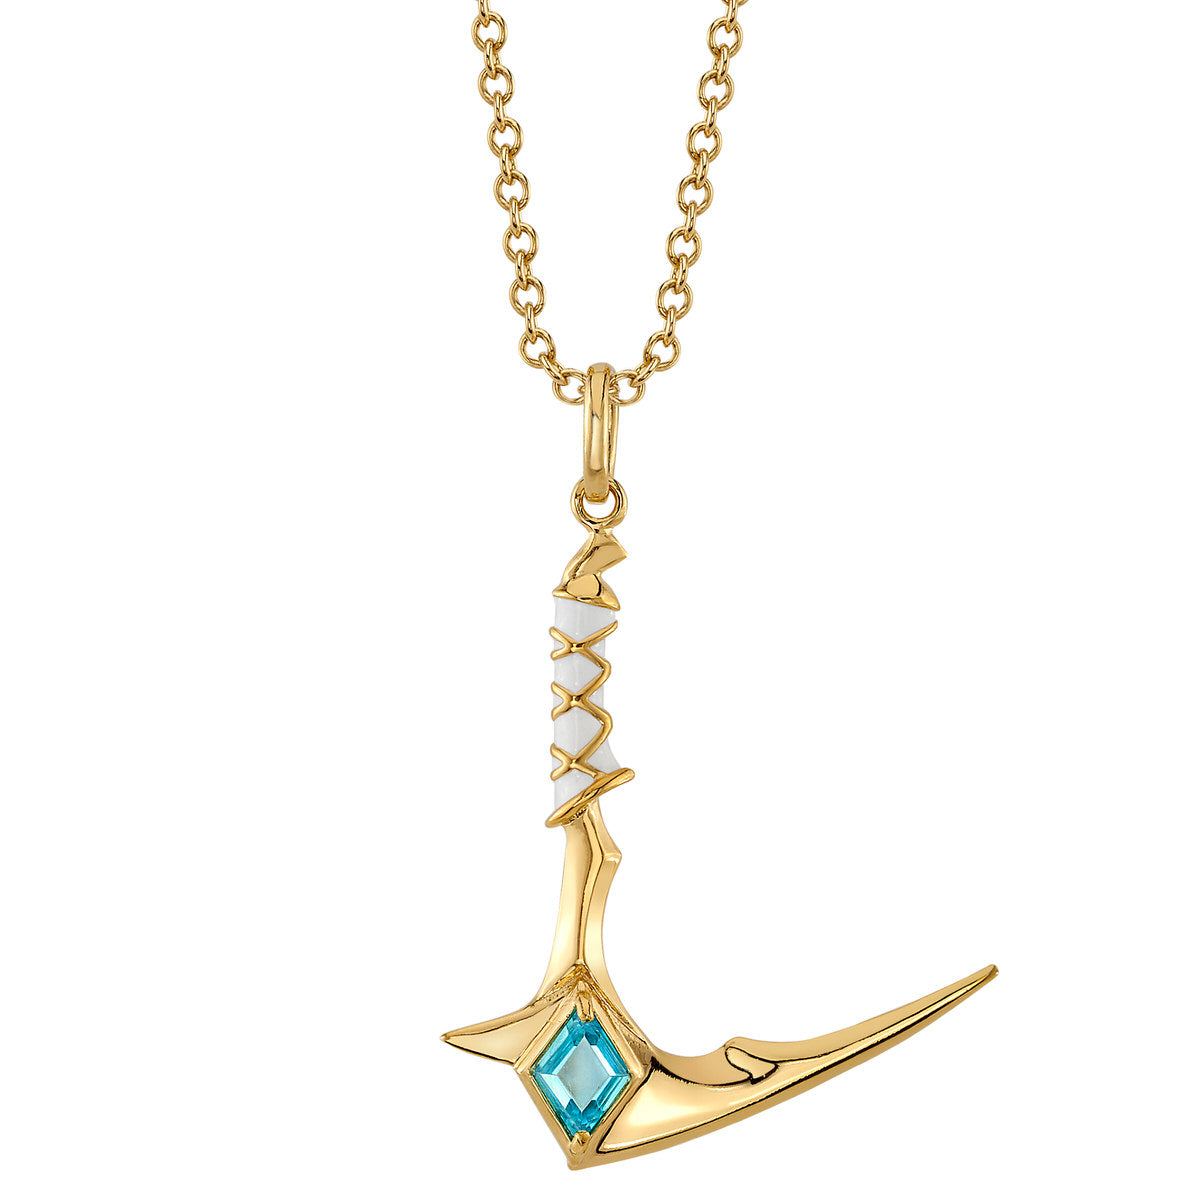 RockLove Jewelry XV Double Key Necklace